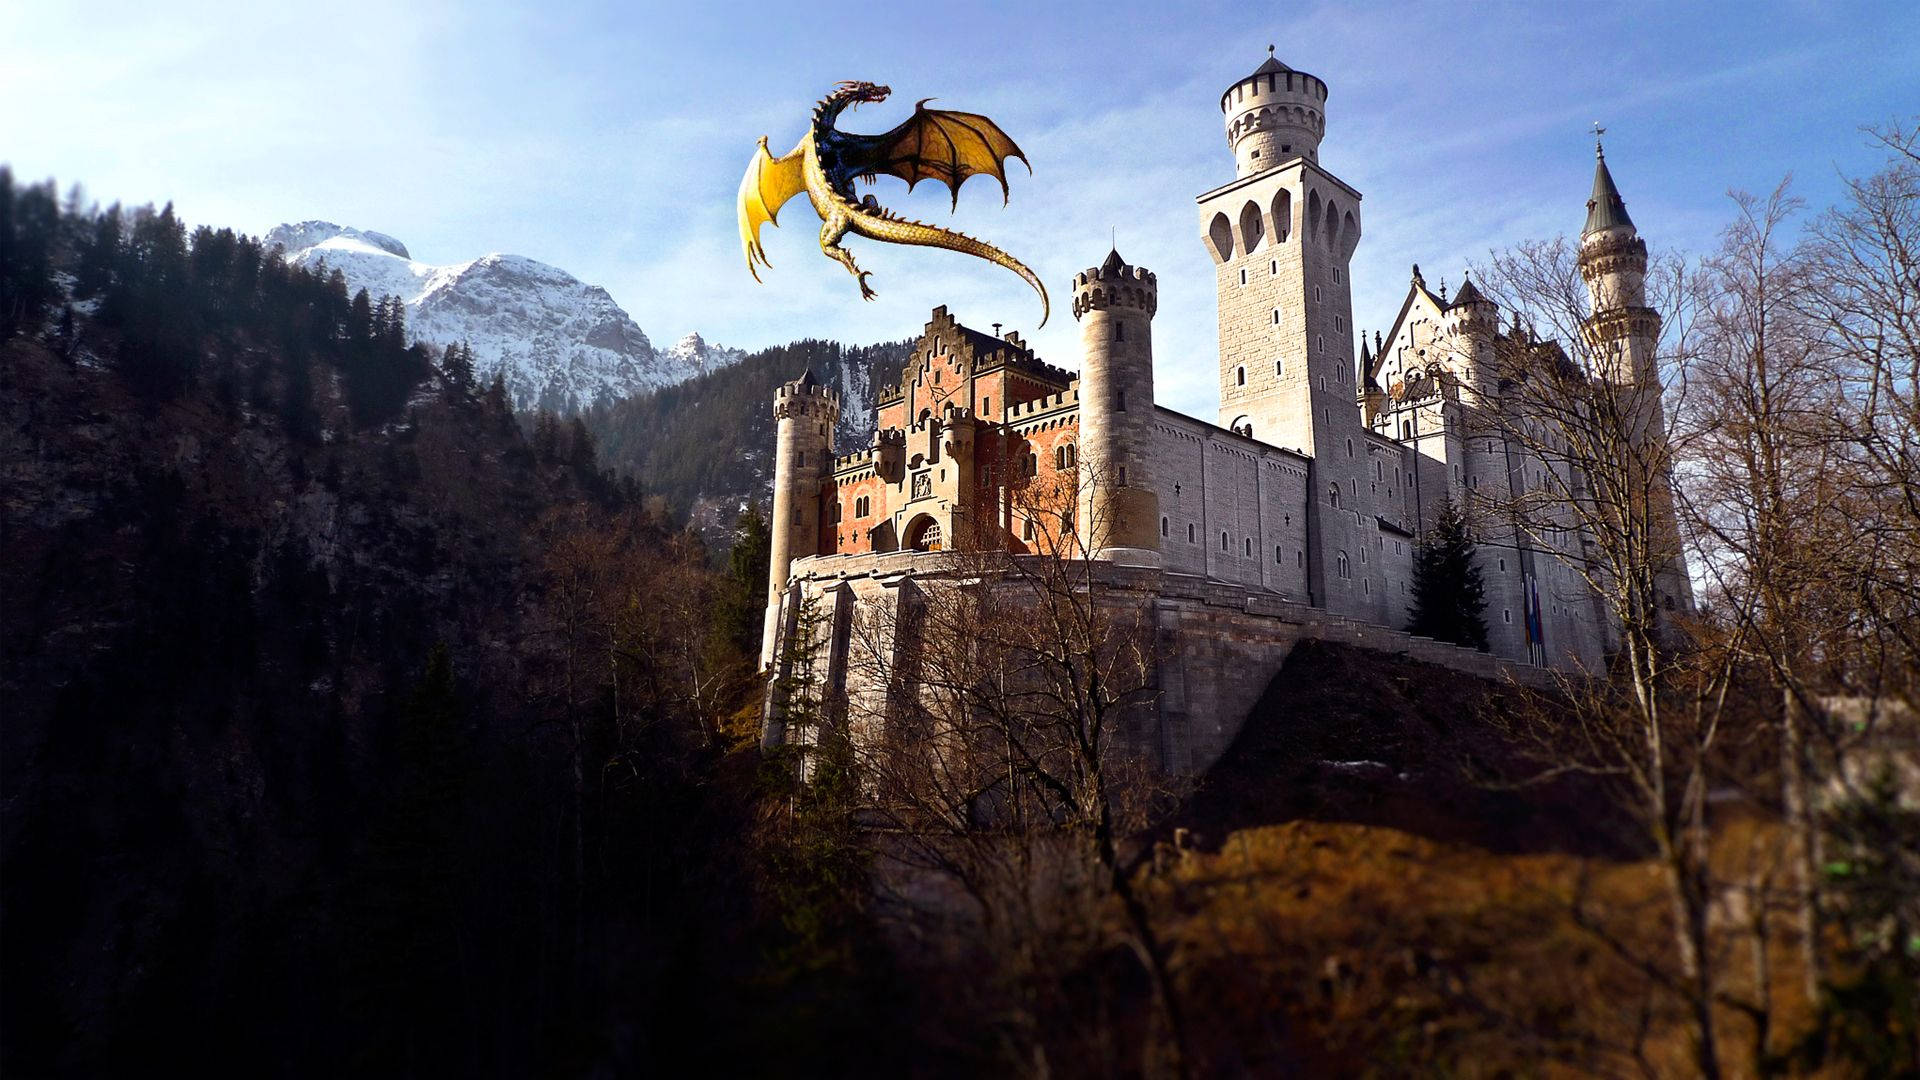 Dragon Castle, Hd Graphics, 4k Wallpaper, Image, Background